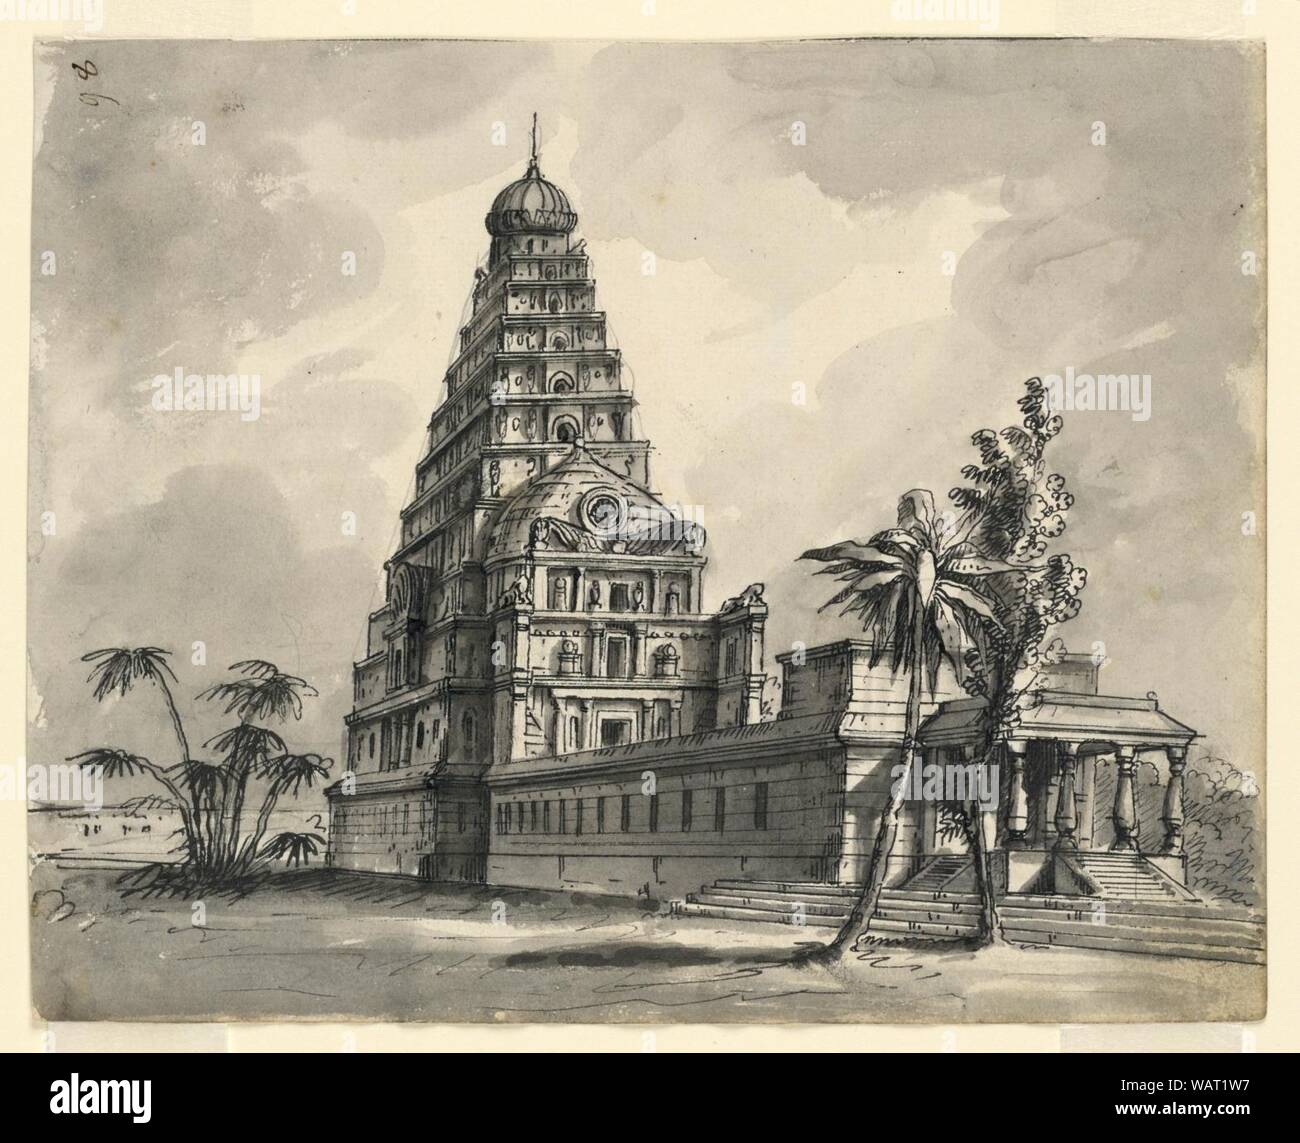 3616 Indian Temple Sketch Images Stock Photos  Vectors  Shutterstock